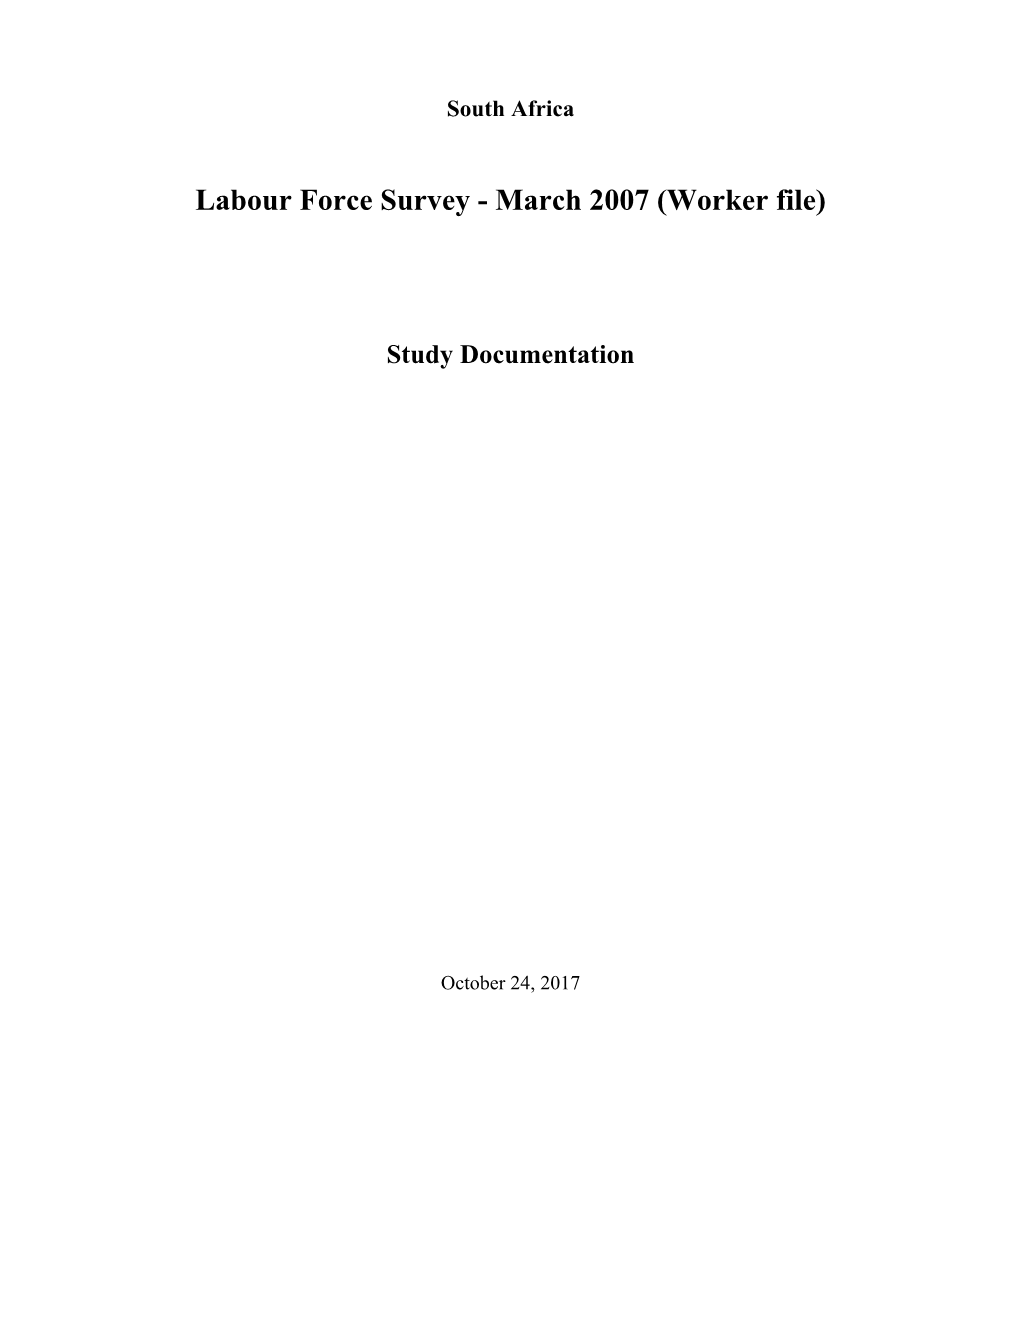 Labour Force Survey - March 2007 (Worker File)